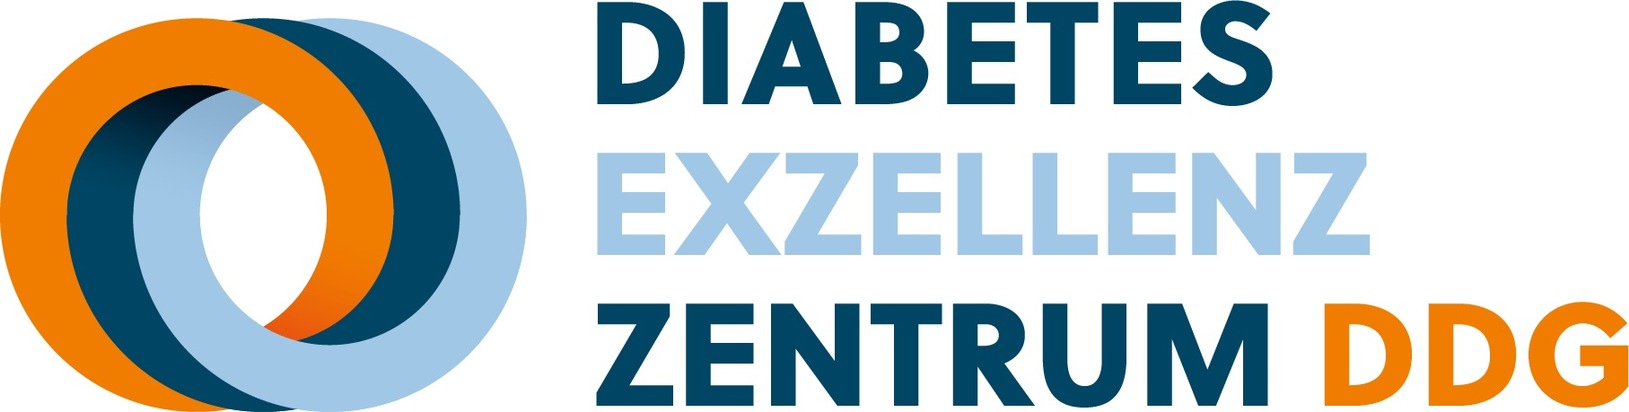 Rehabilitationsklinik Hohenelse ist jetzt Diabetes Exzellenzzentrum der DDG